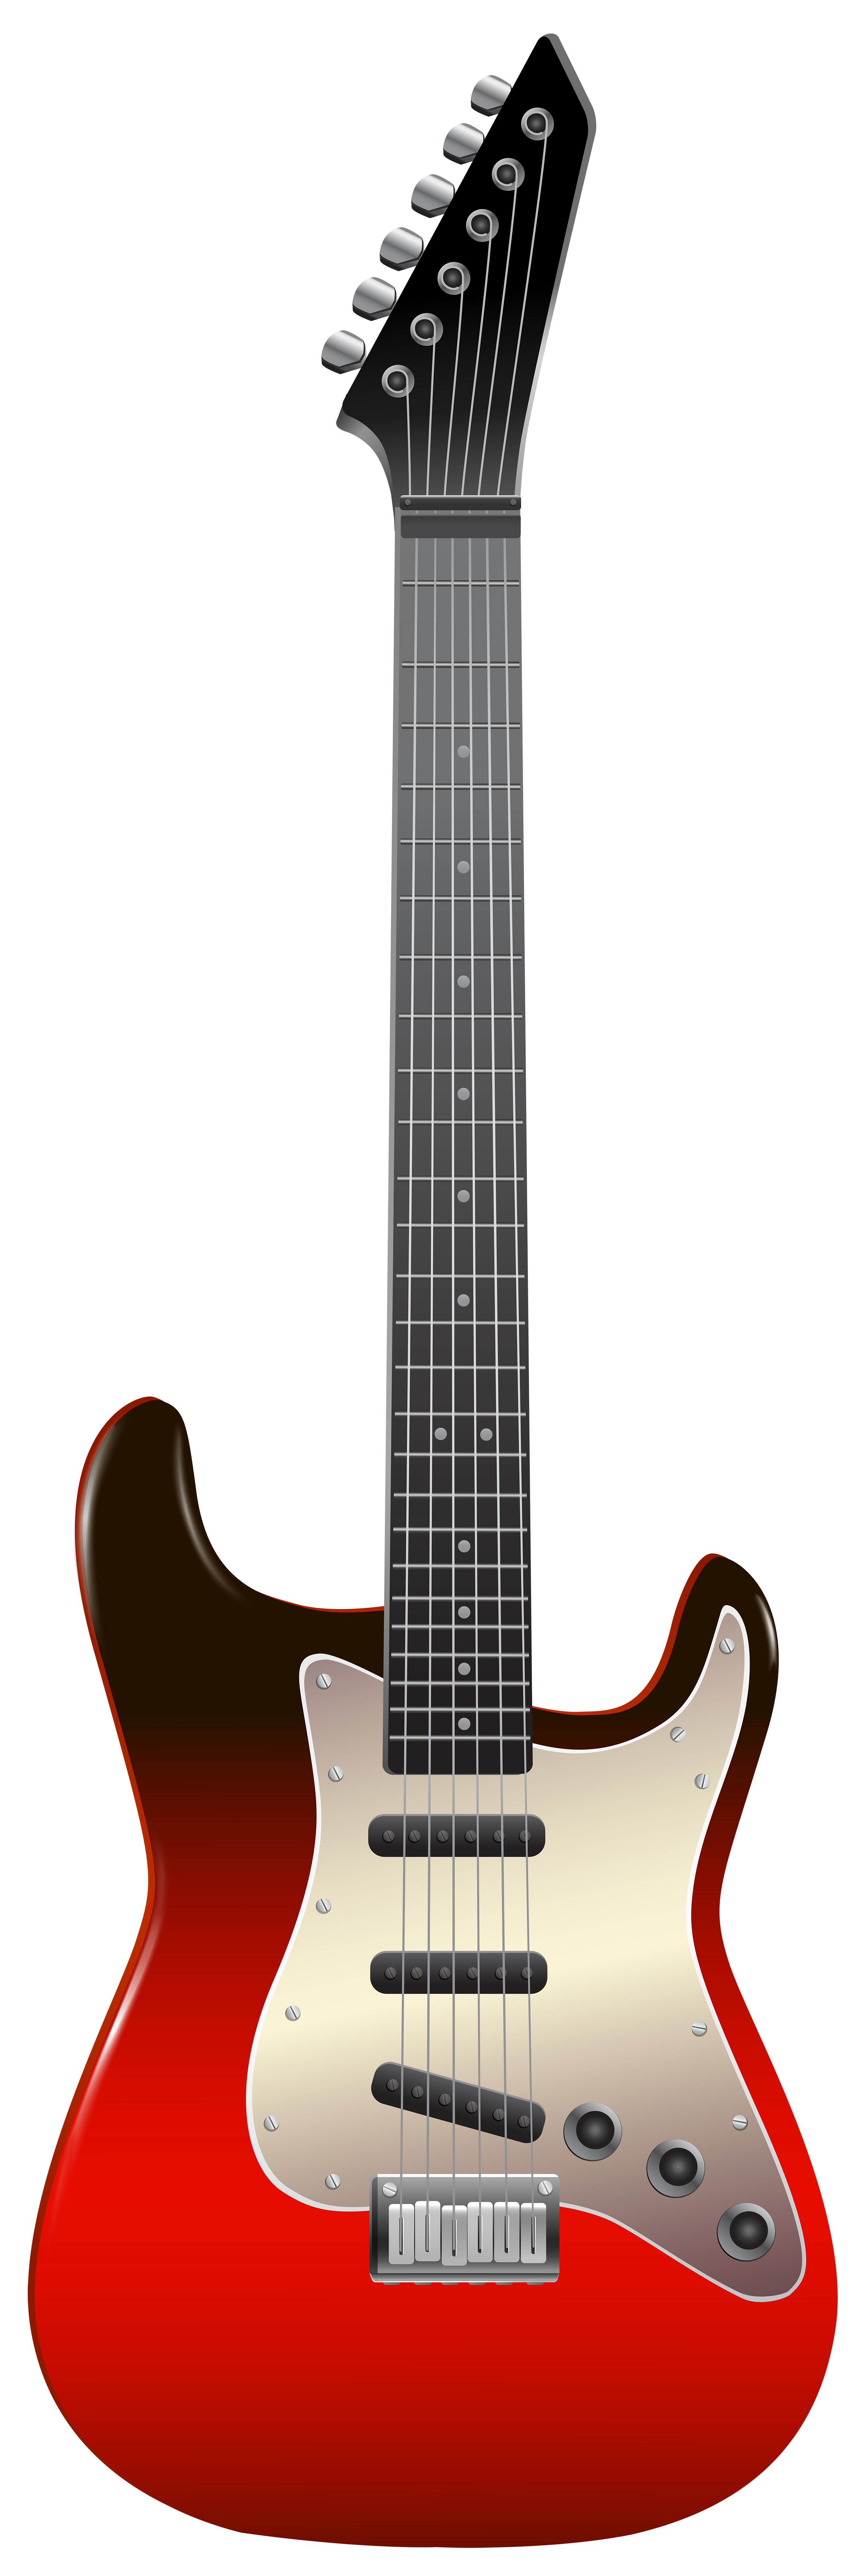 Clipart guitar frame. Png clip art image